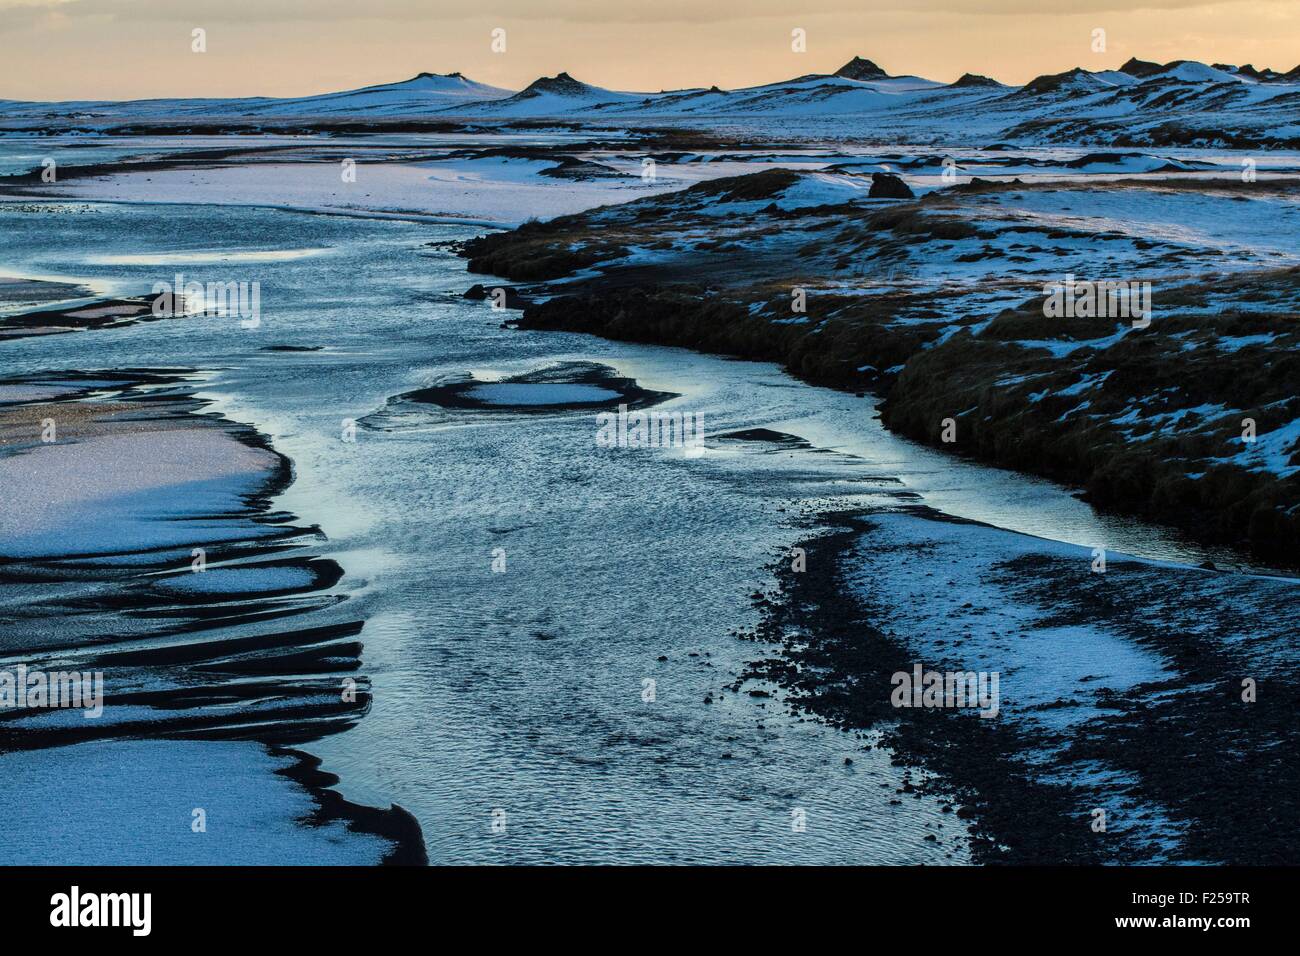 Iceland, South coast, Myrdalssandur, reflections on the water through the black sand plains Myrdalssandur, Sunrise Stock Photo